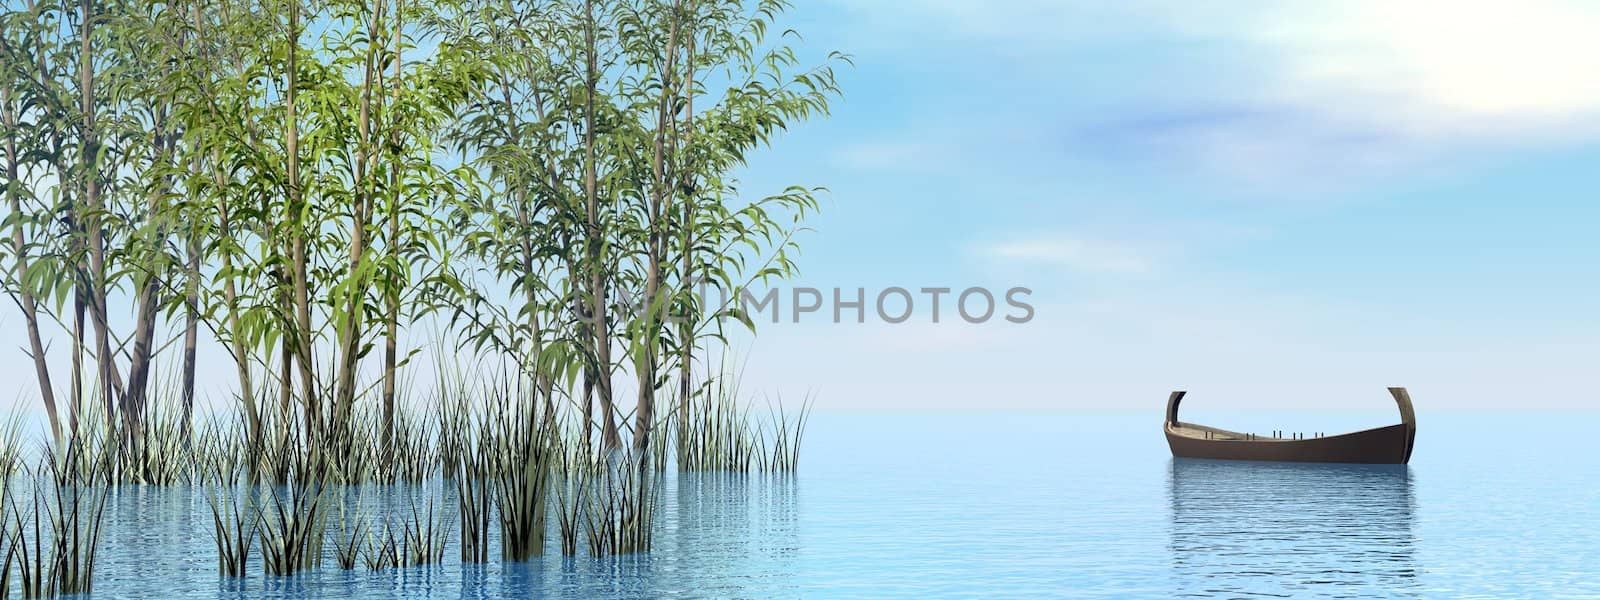 Peaceful wood boat - 3D render by Elenaphotos21